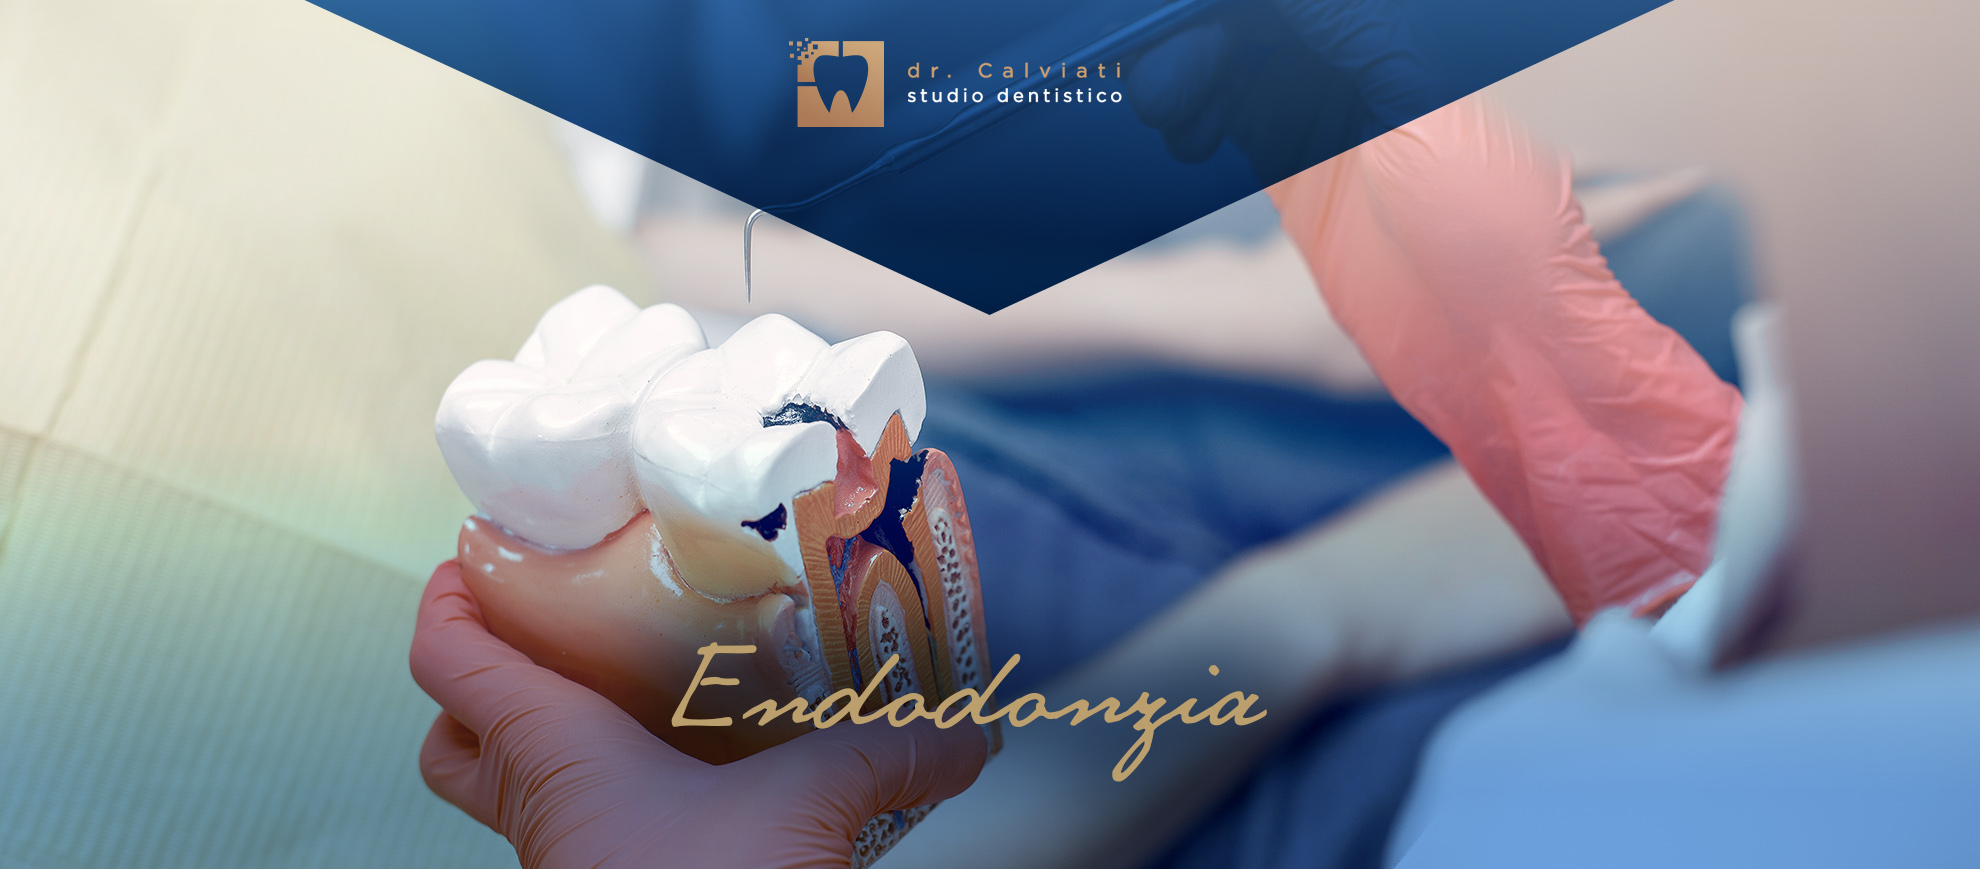 banner pag interne endodonzia